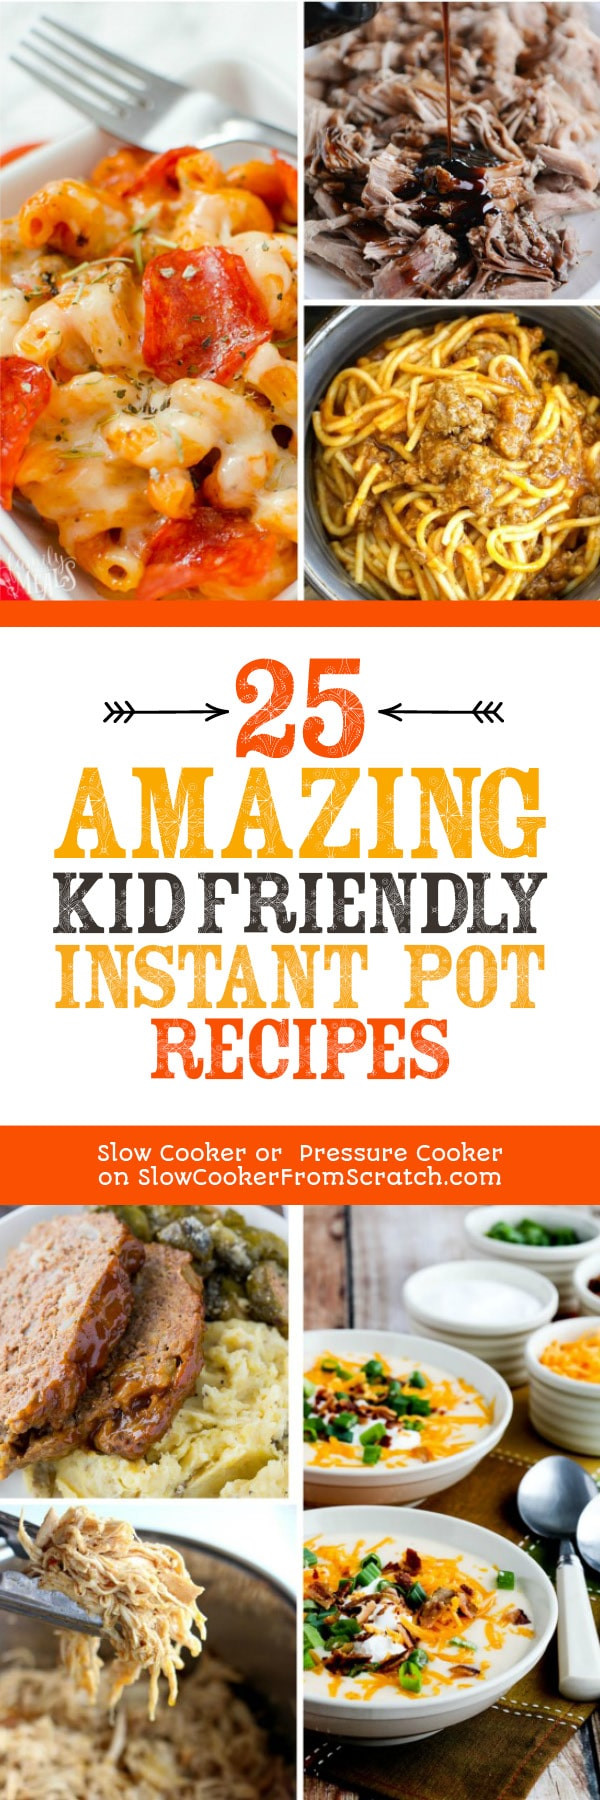 Instant Pot Kid Friendly Recipes
 25 Amazing Kid Friendly Instant Pot Recipes Slow Cooker